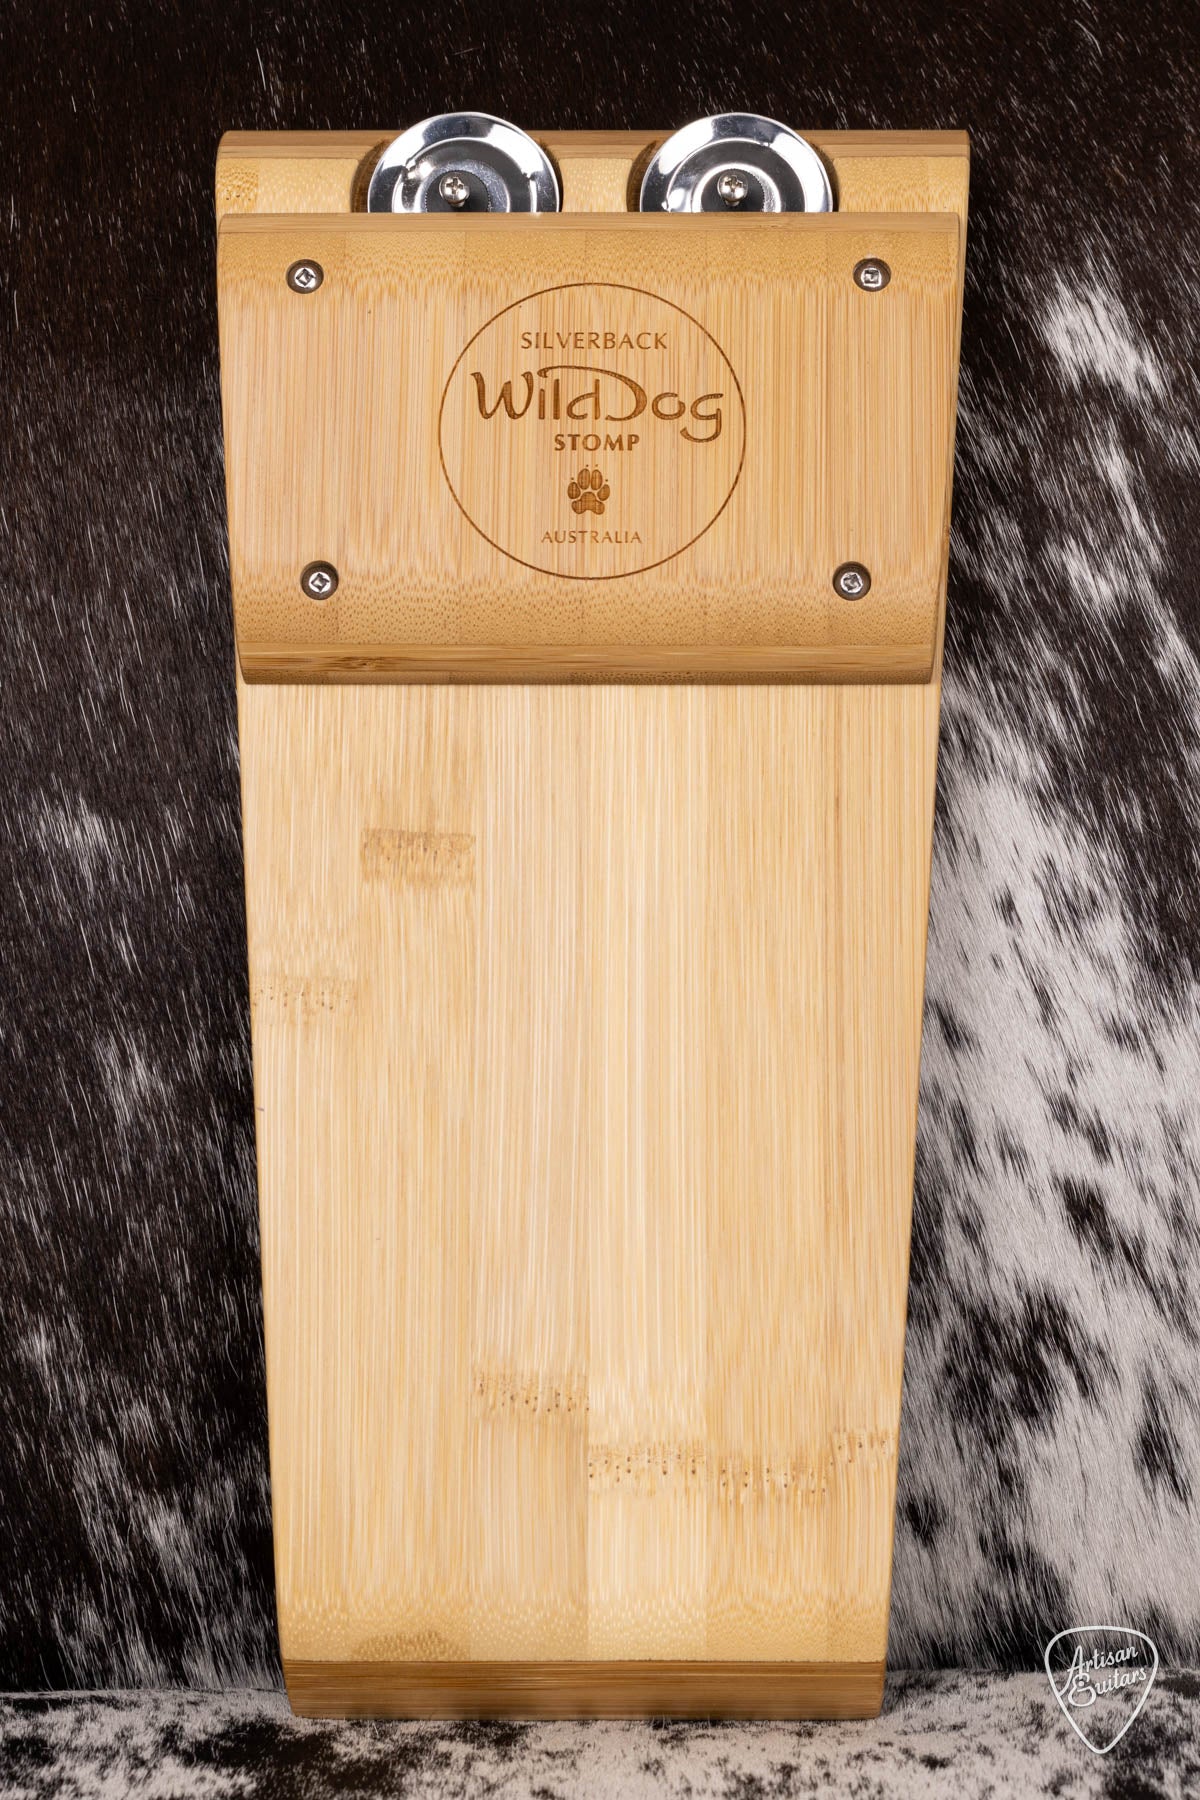 Wild Dog Silverback Stomp Box w/ Bamboo Timber & Tamborine Jingles - WD-421022